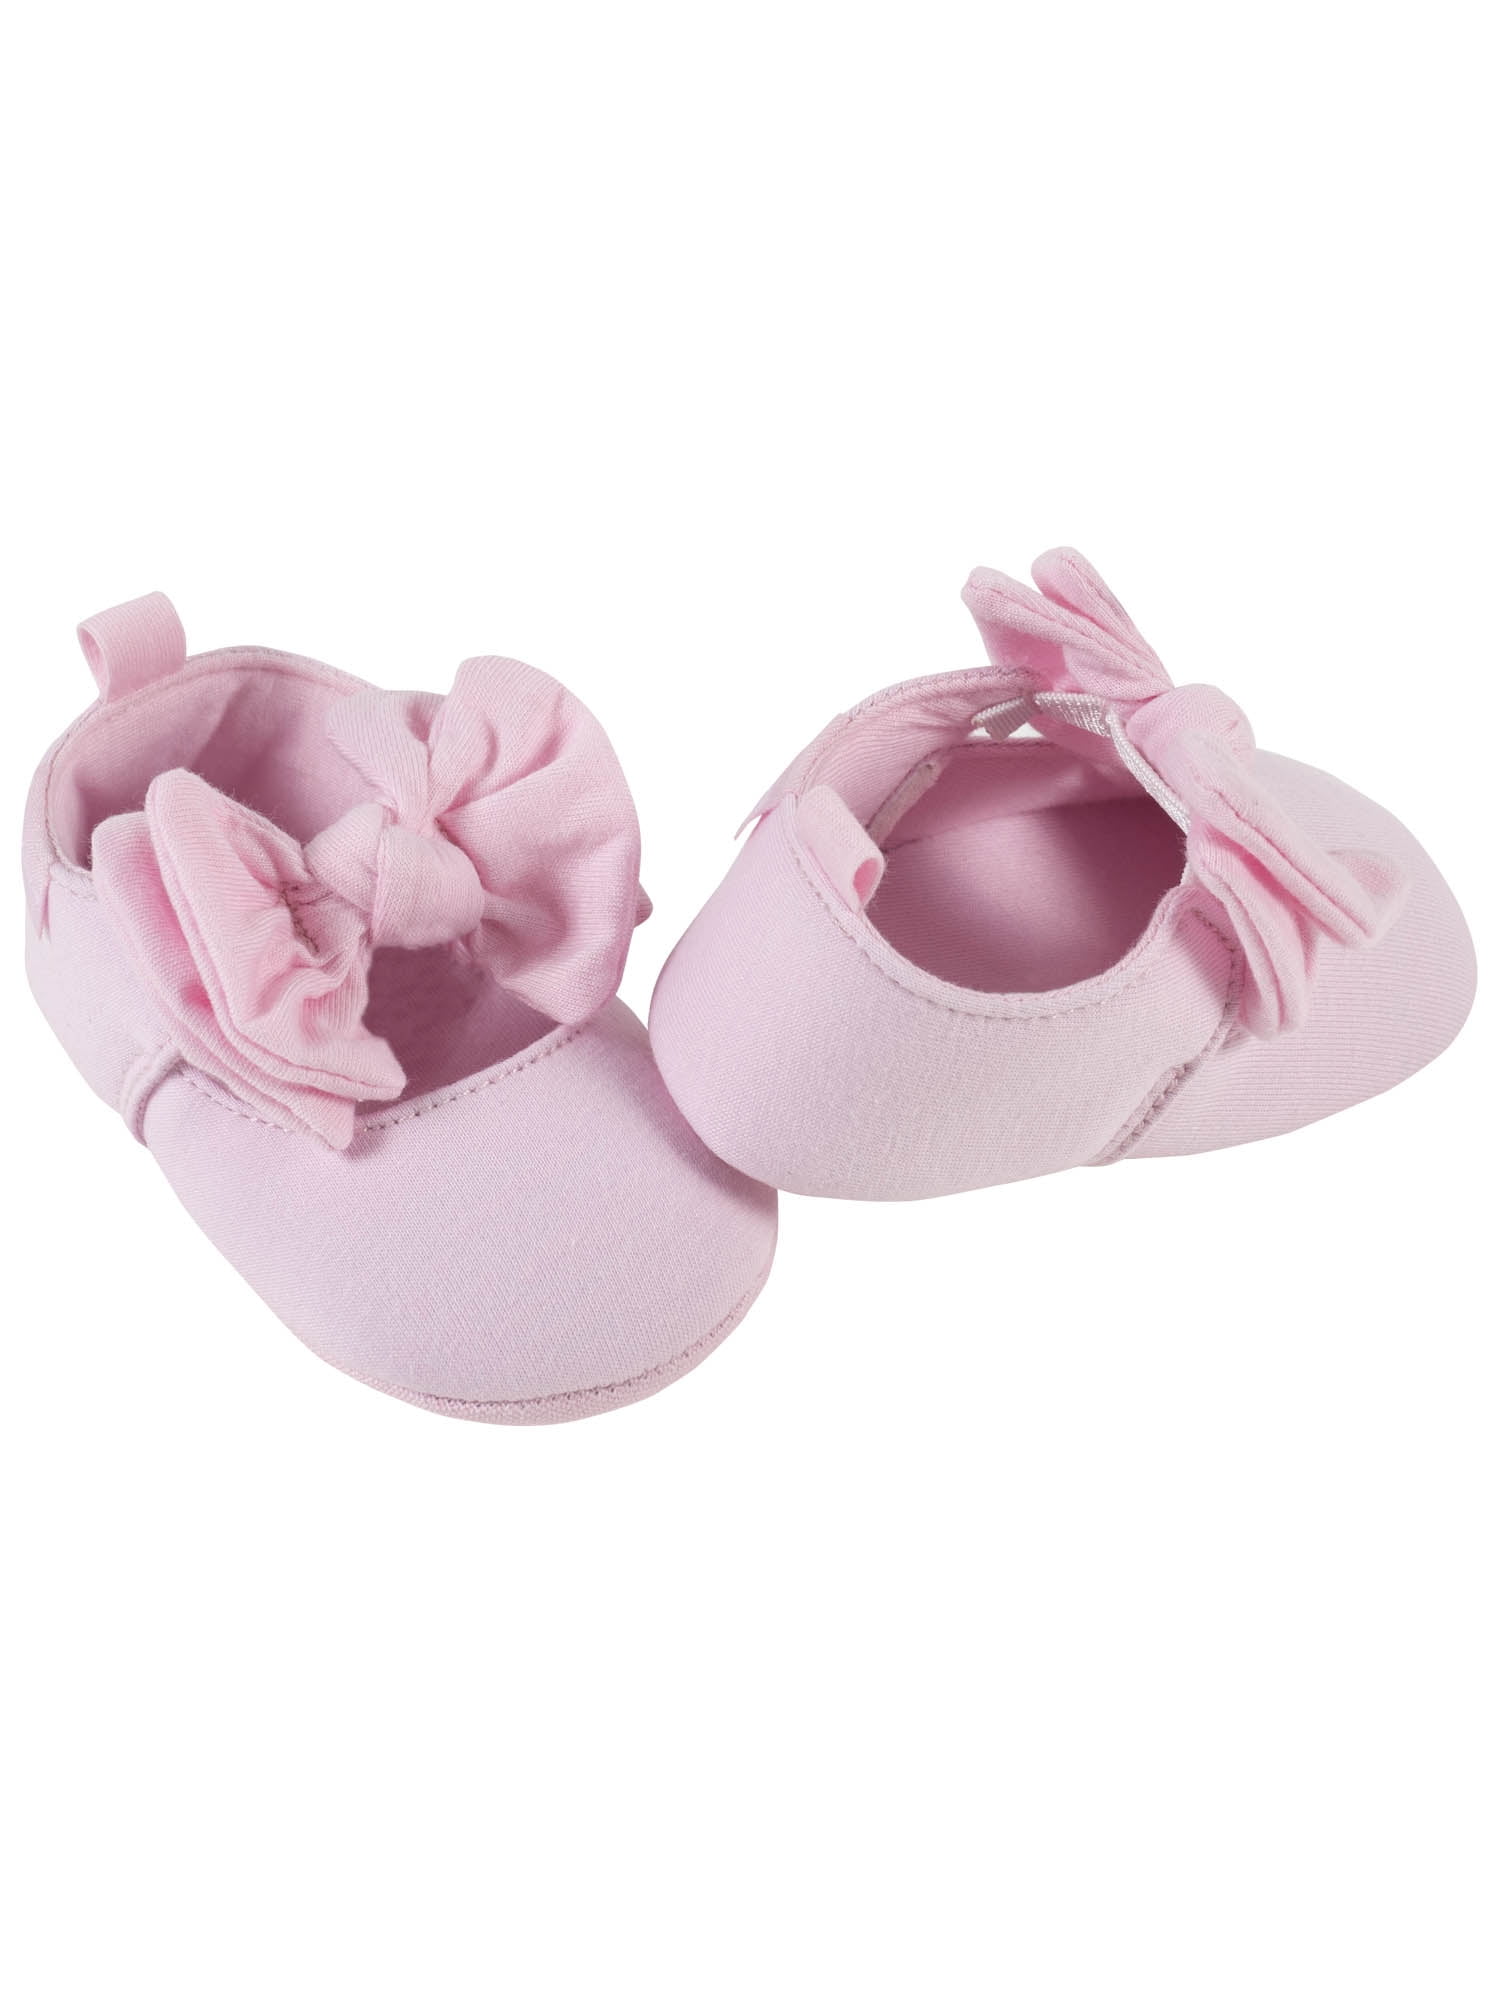 Baby babies girls shoe soft sole sandal 0-3 3-6 6-12 newborn 